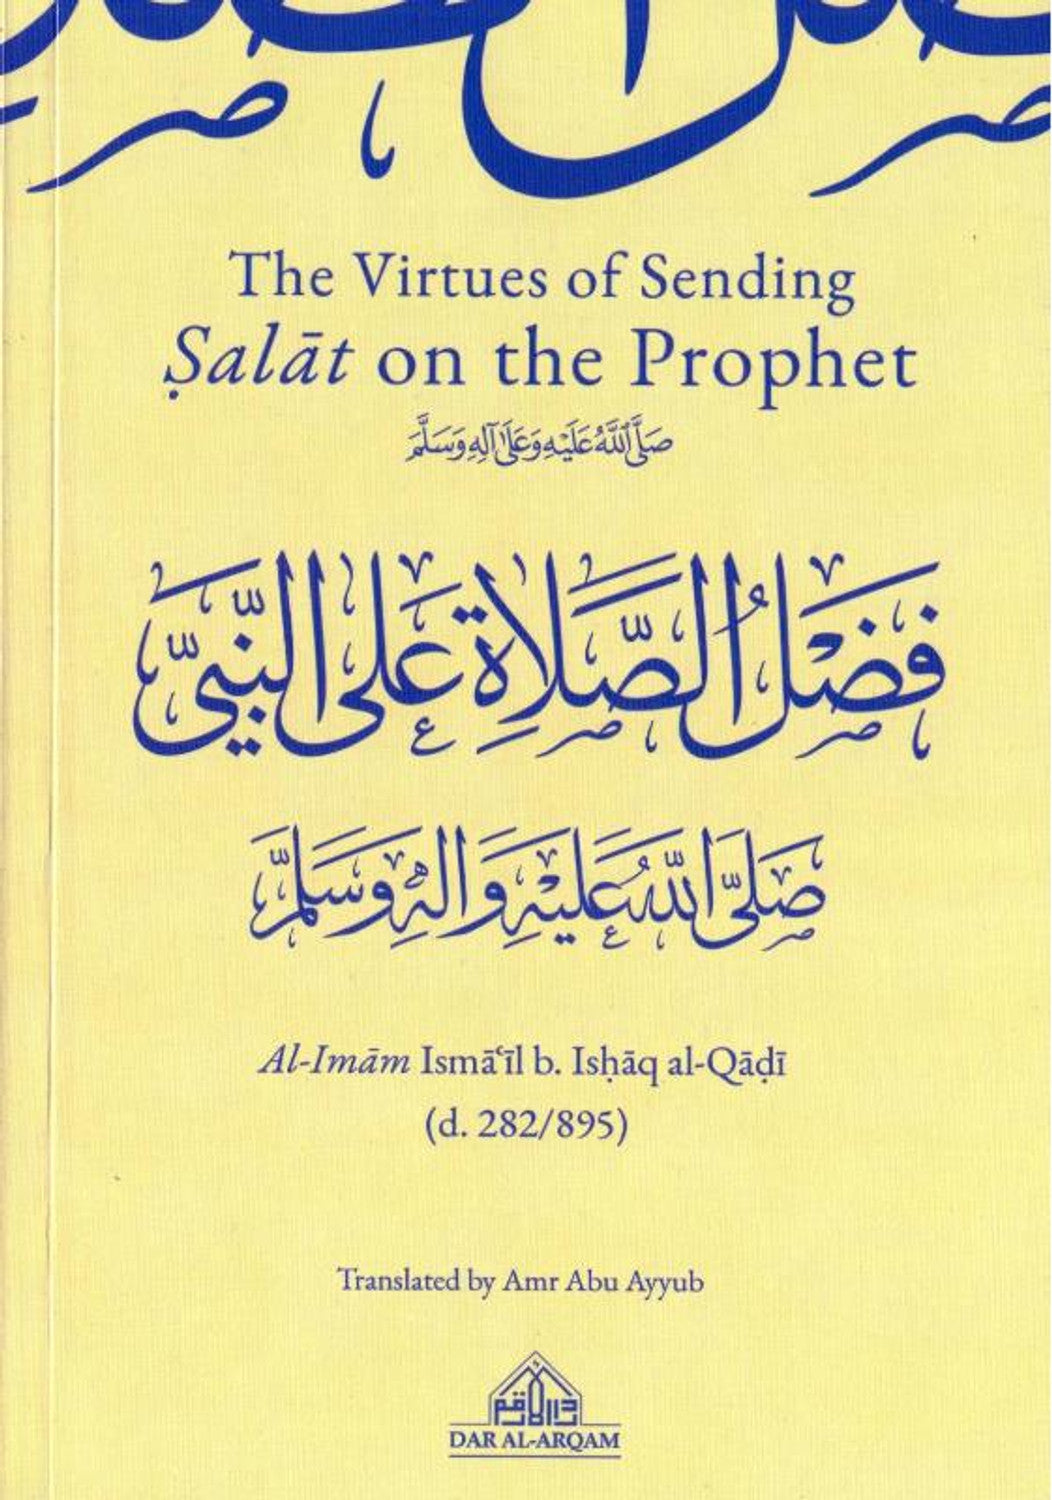 The Virtues of Sending Salat on the Prophet